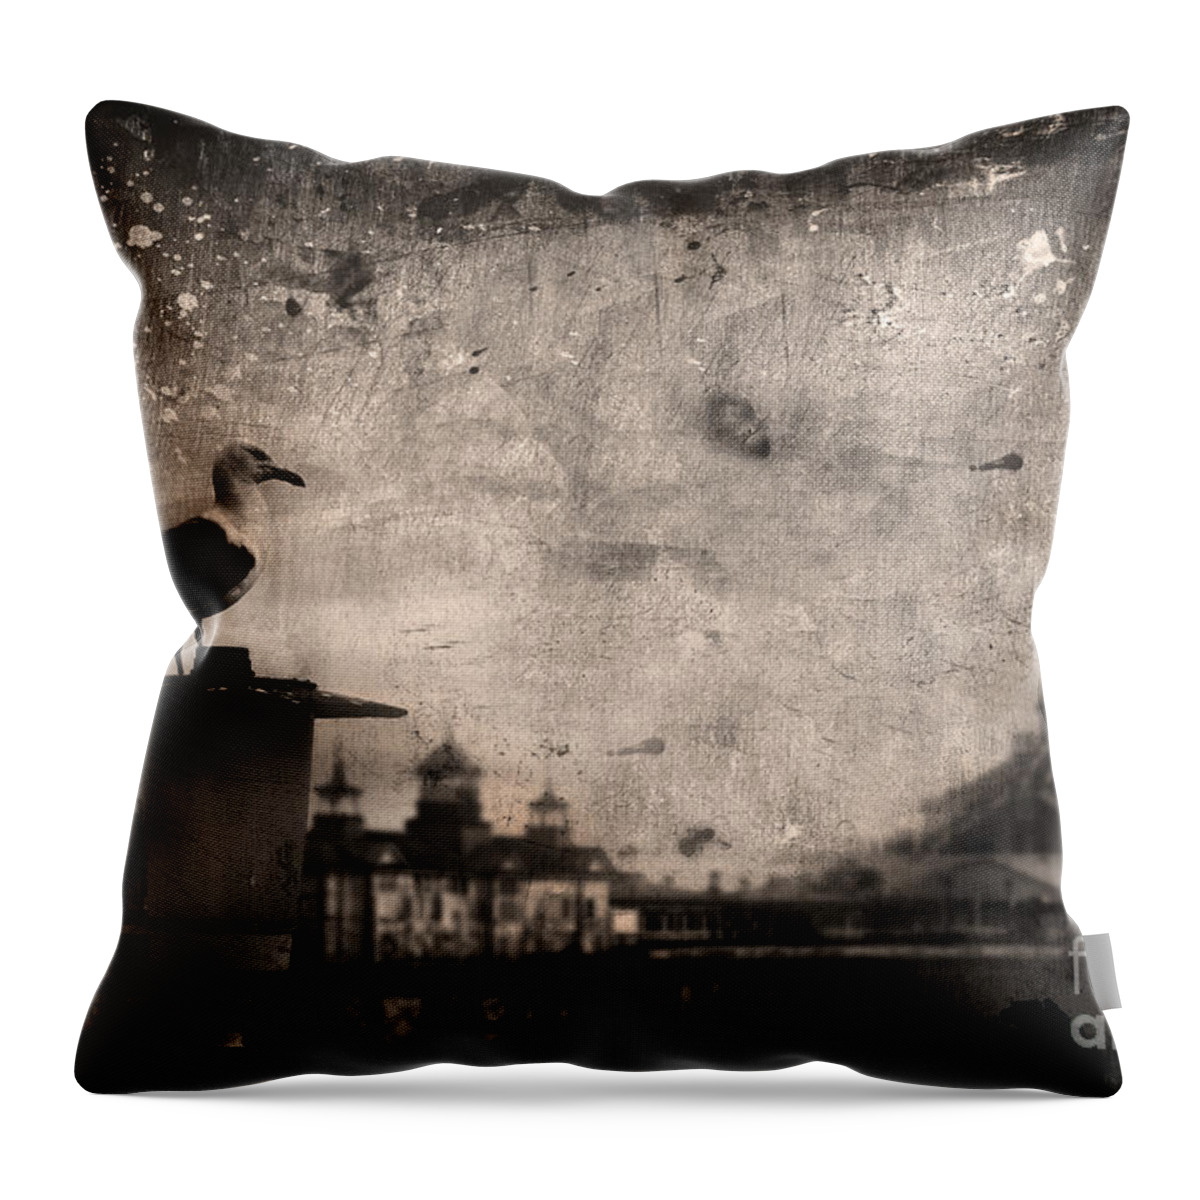 Yhun Suarez Throw Pillow featuring the photograph King Of The Pier by Yhun Suarez